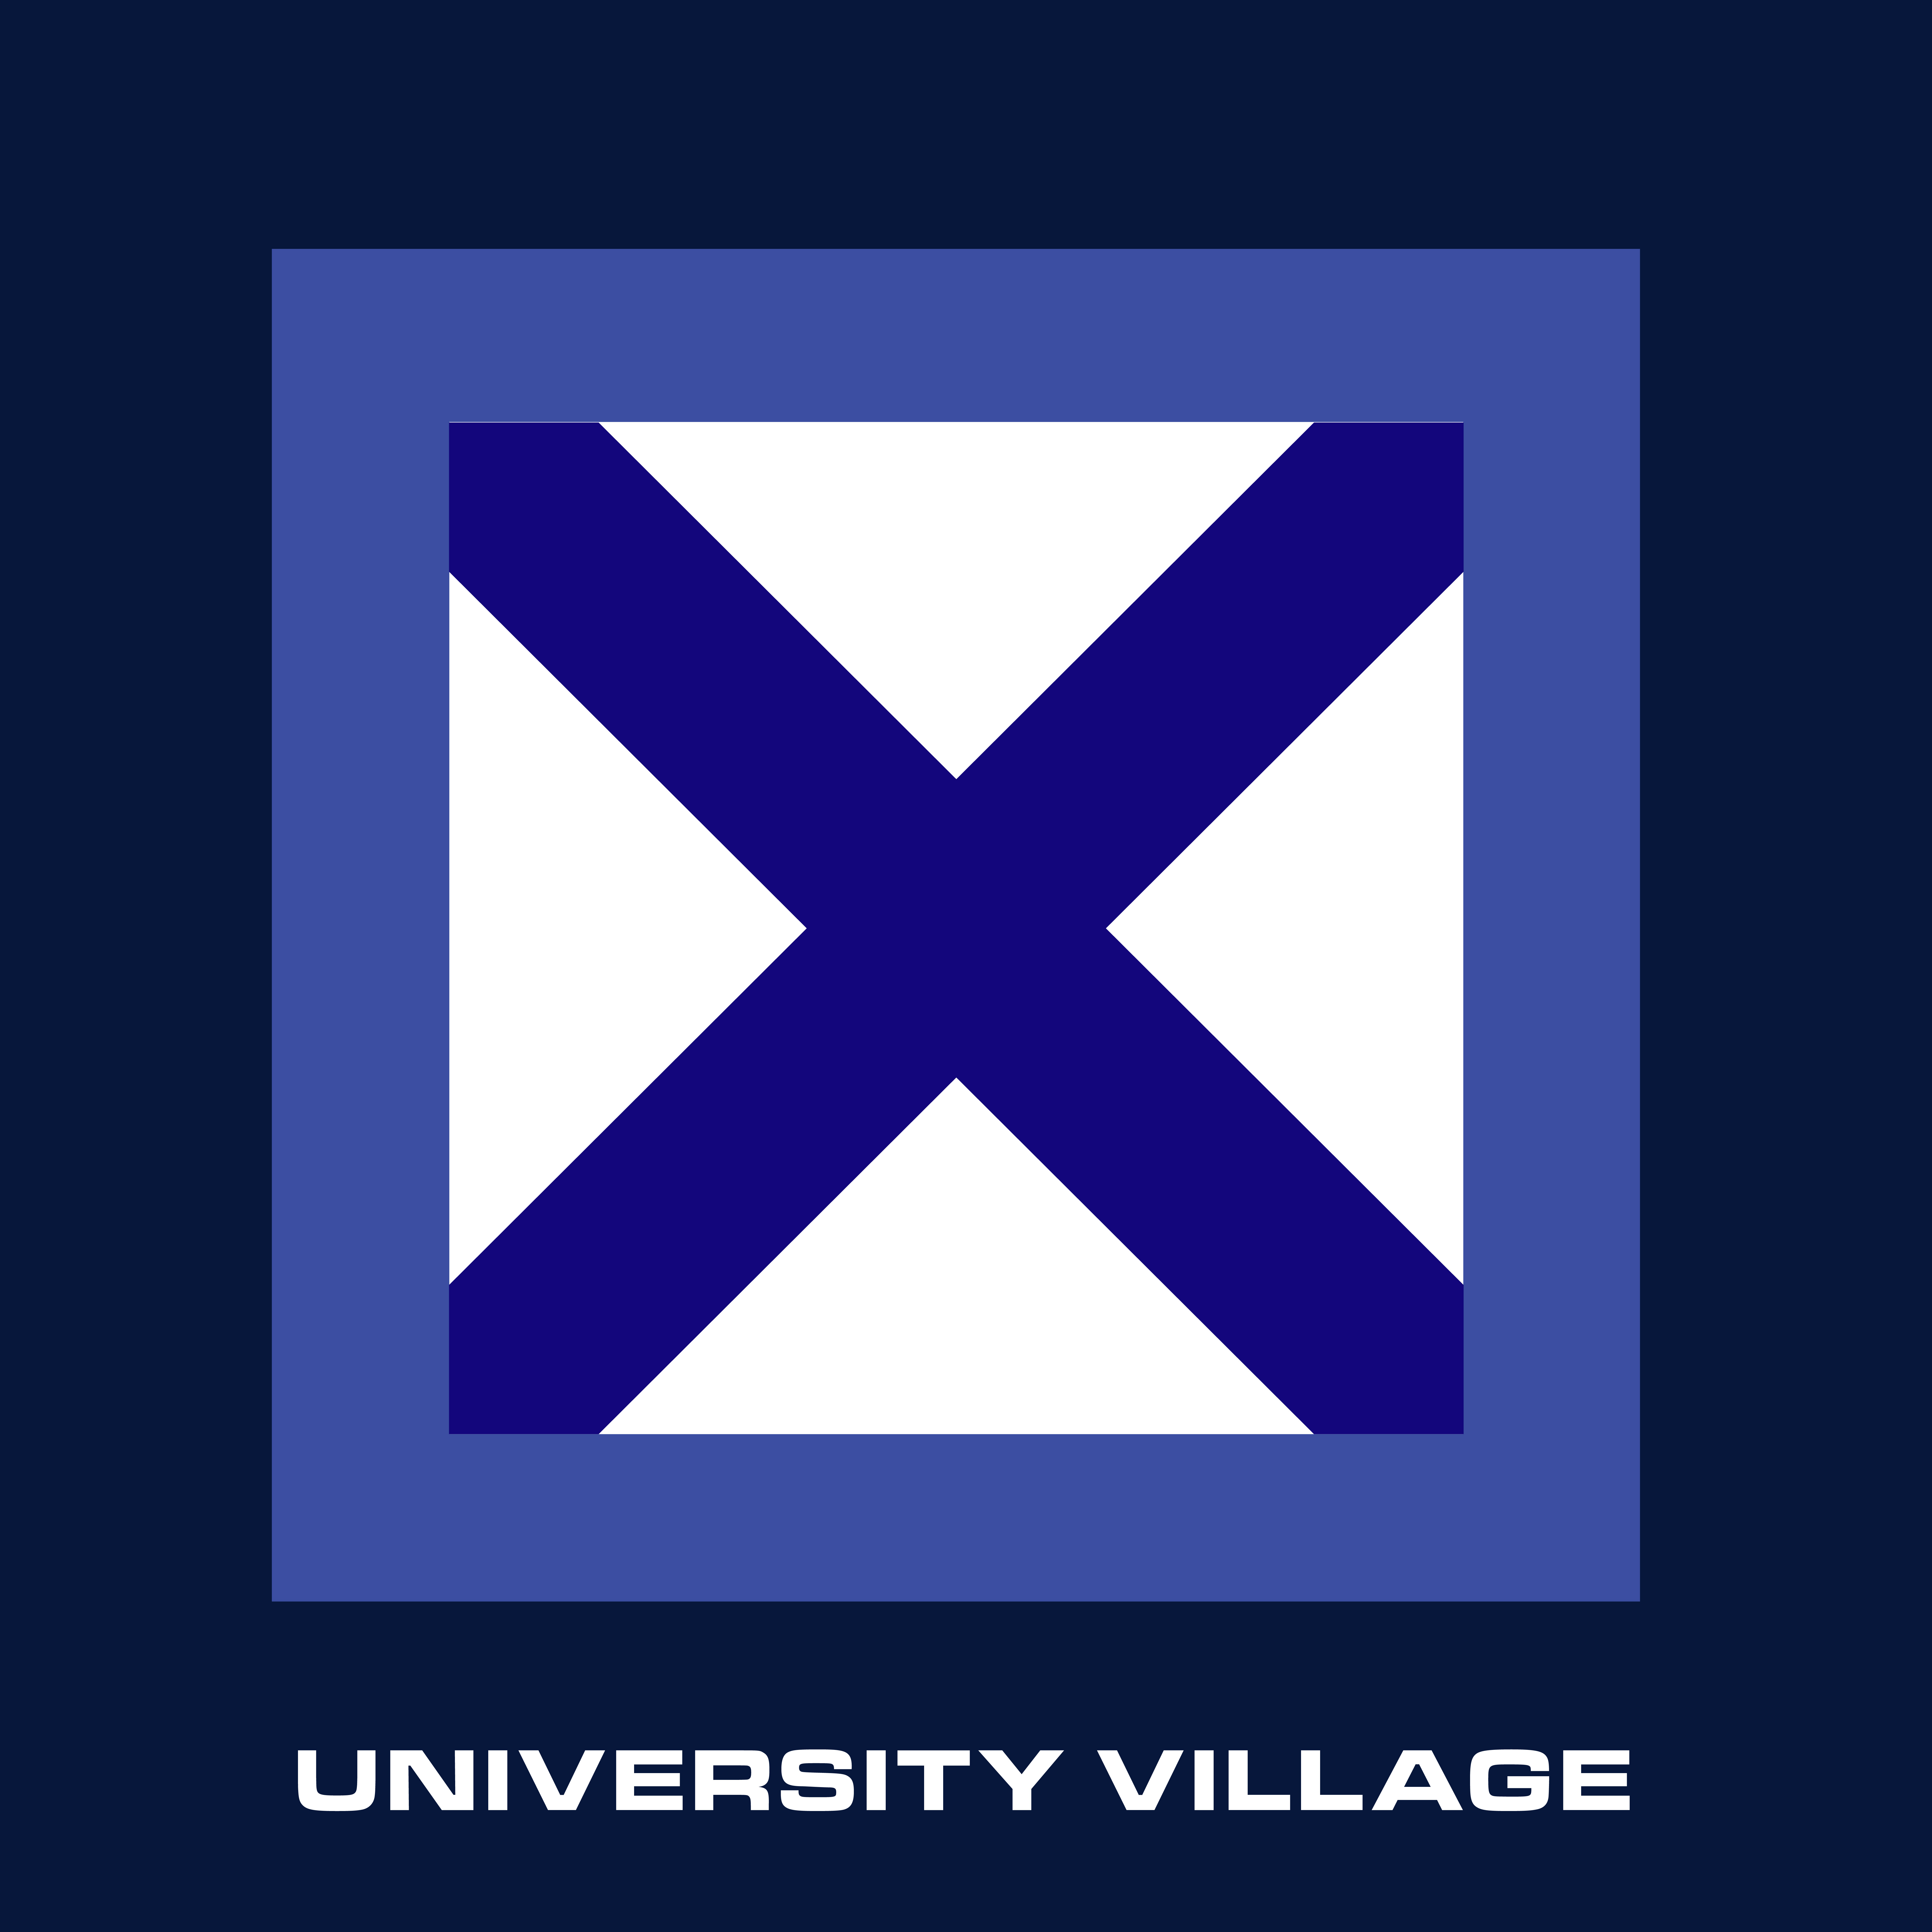 The Village Flag